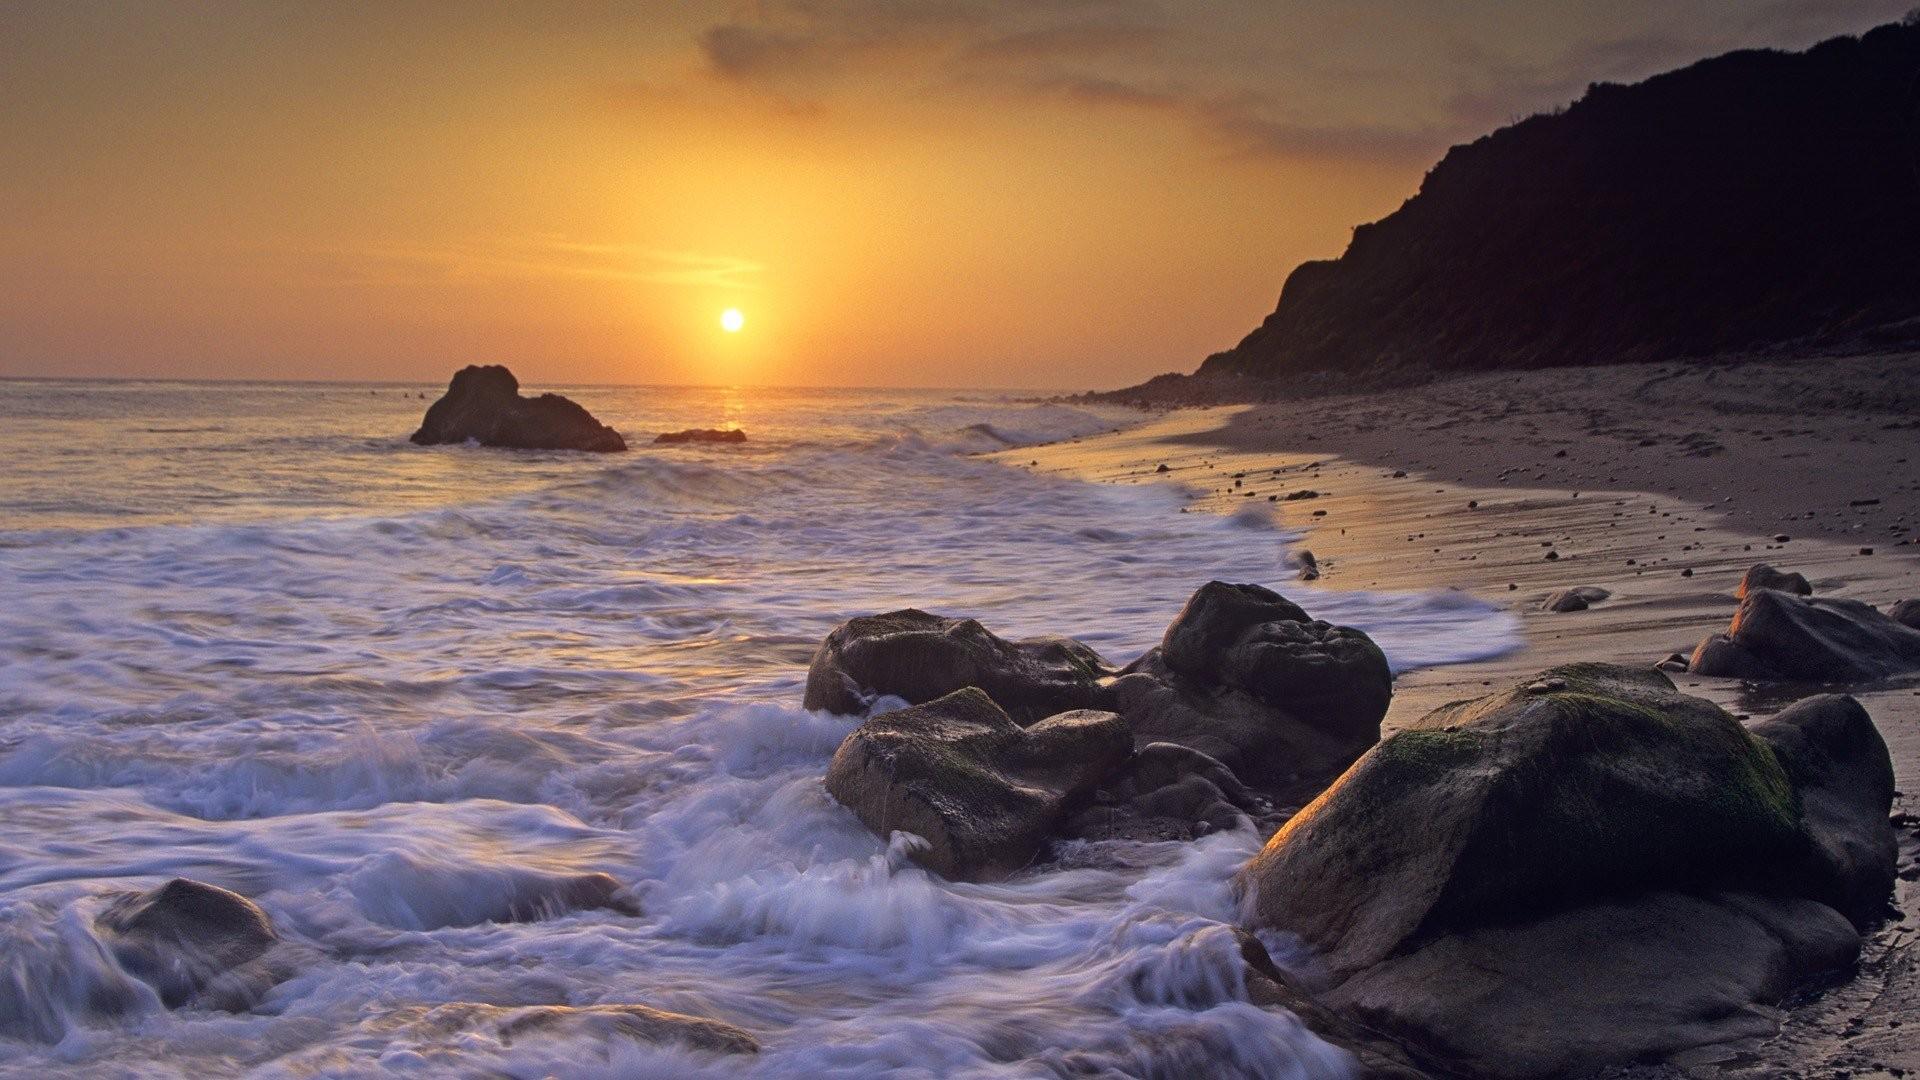 High Resolution, Sea Image, Vacation, Beaches, sunset, California